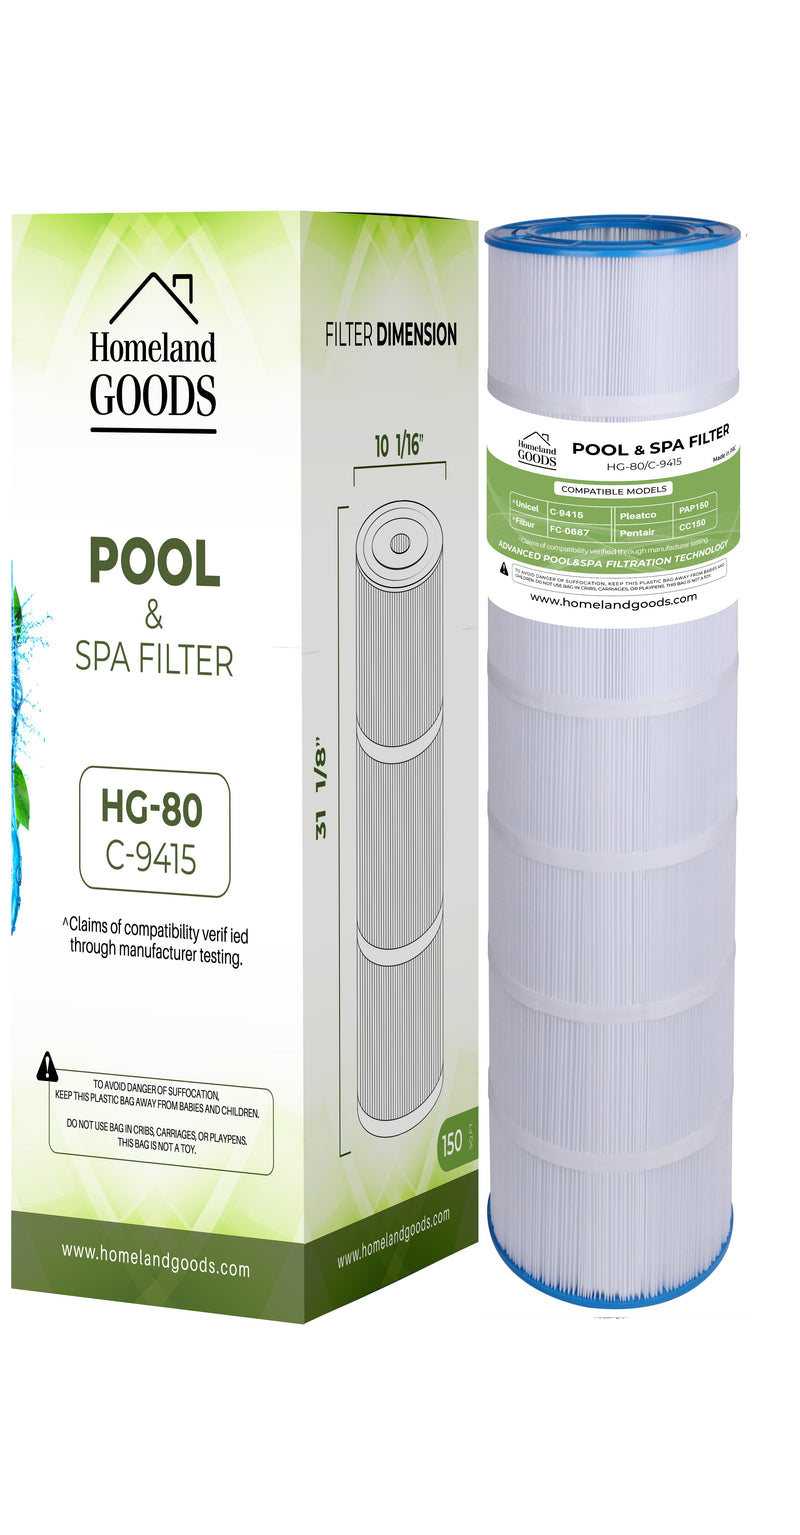 PLF150A Pool Filter Replacement for Pentair CC150, CCRP150, PAP150, Unicel C-9415, R173216, Filbur FC-0687, 160317, 160355, 160352, Predator 150, 150 sq. ft. Filter Cartridge